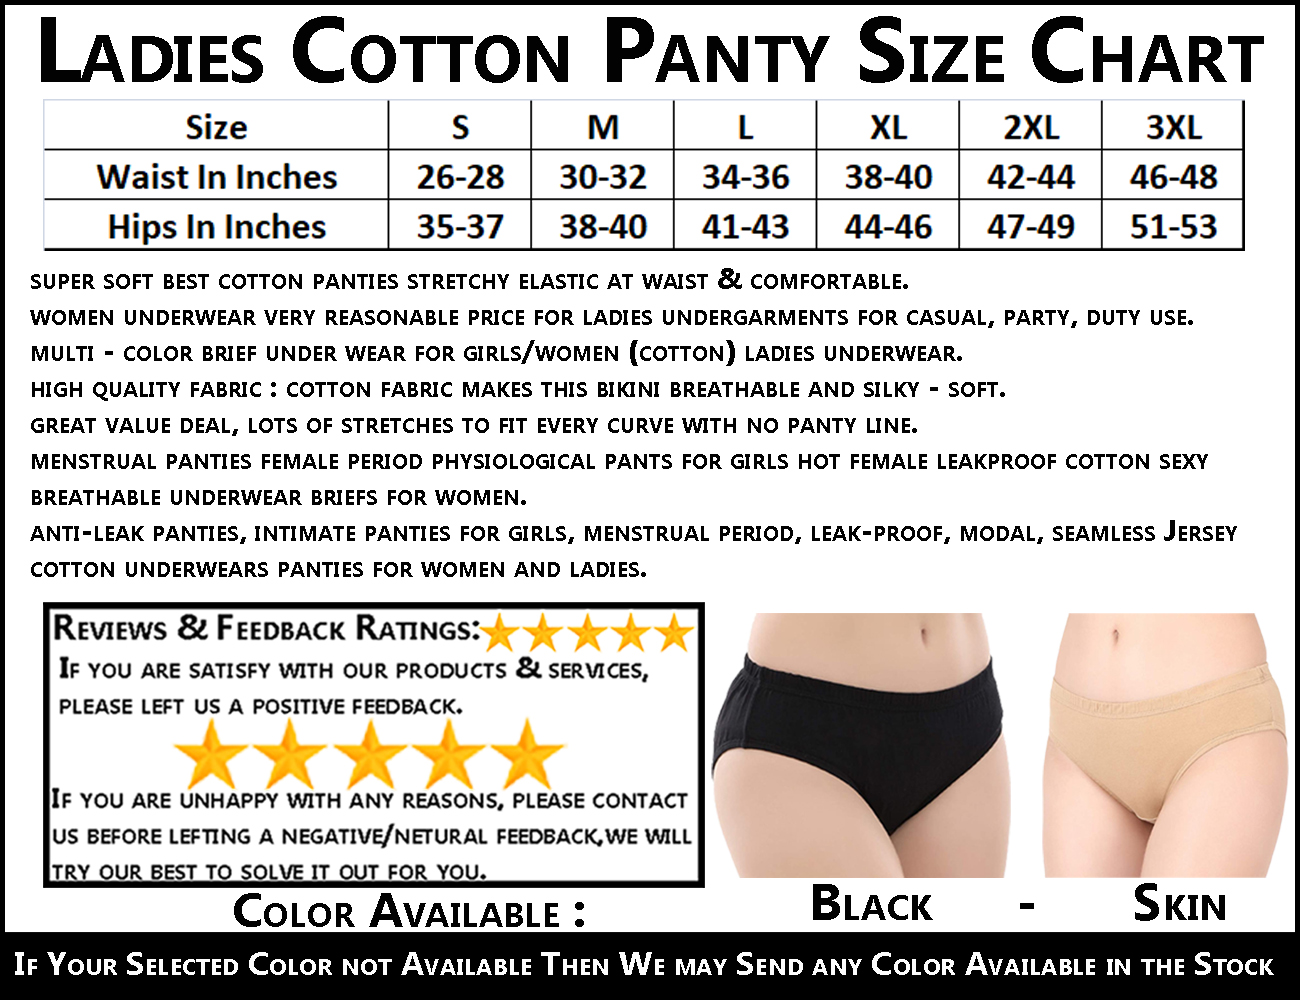 Pack of 2 Ladies Underwear Soft Cotton Plain Panty for Women